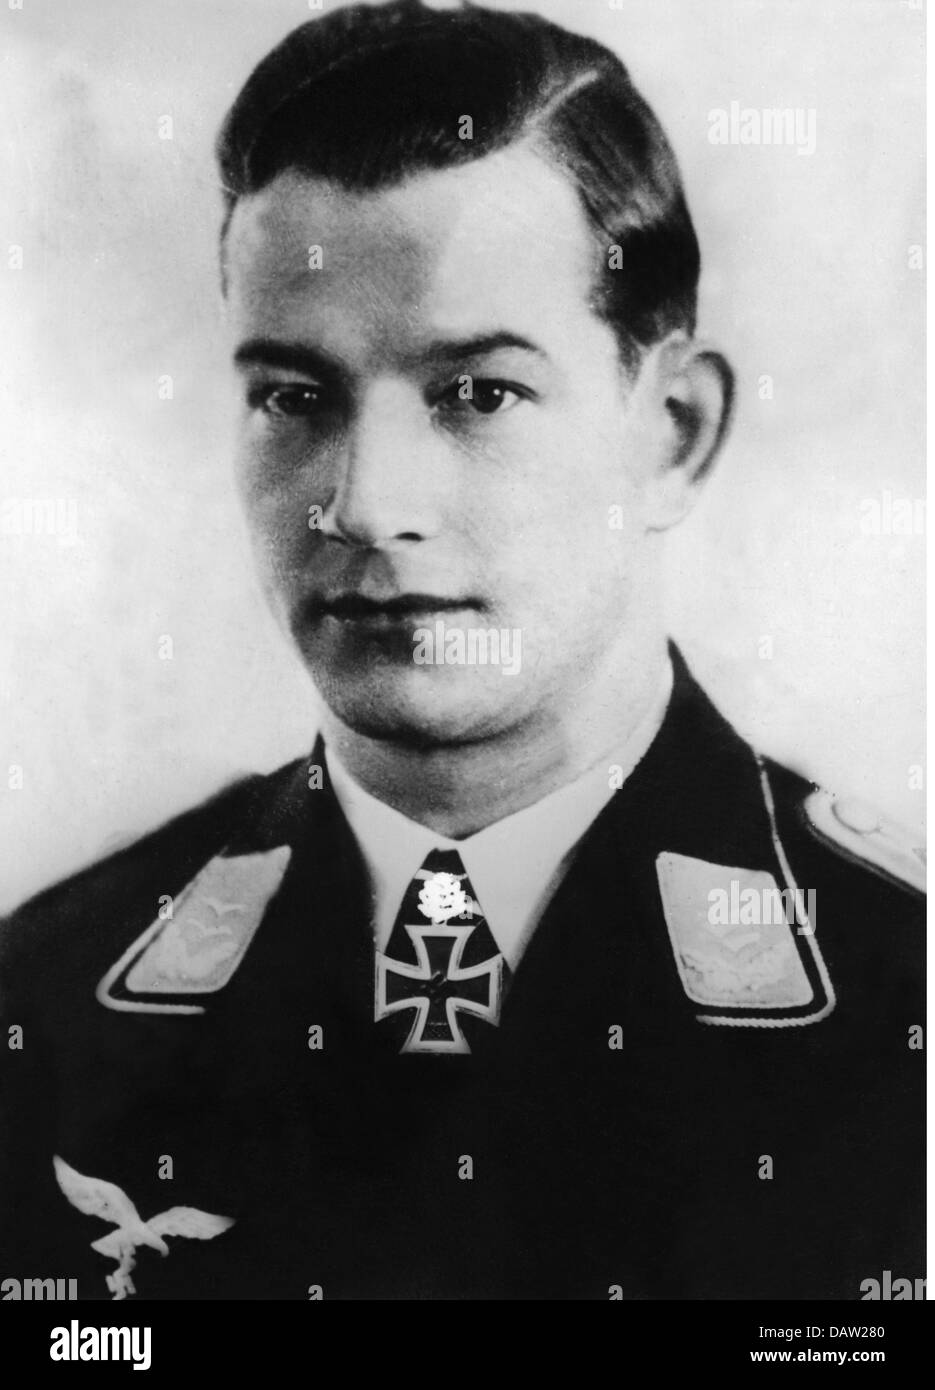 Joppien, Hermann-Friedrich 'Jupp', 19.7.1912 - 28.8.1941, German pilot, portrait, as captain, Group Commander, 1st Group, 51st Bomber Wing, with Knight's Cross, awarded 24.4.1941, Stock Photo